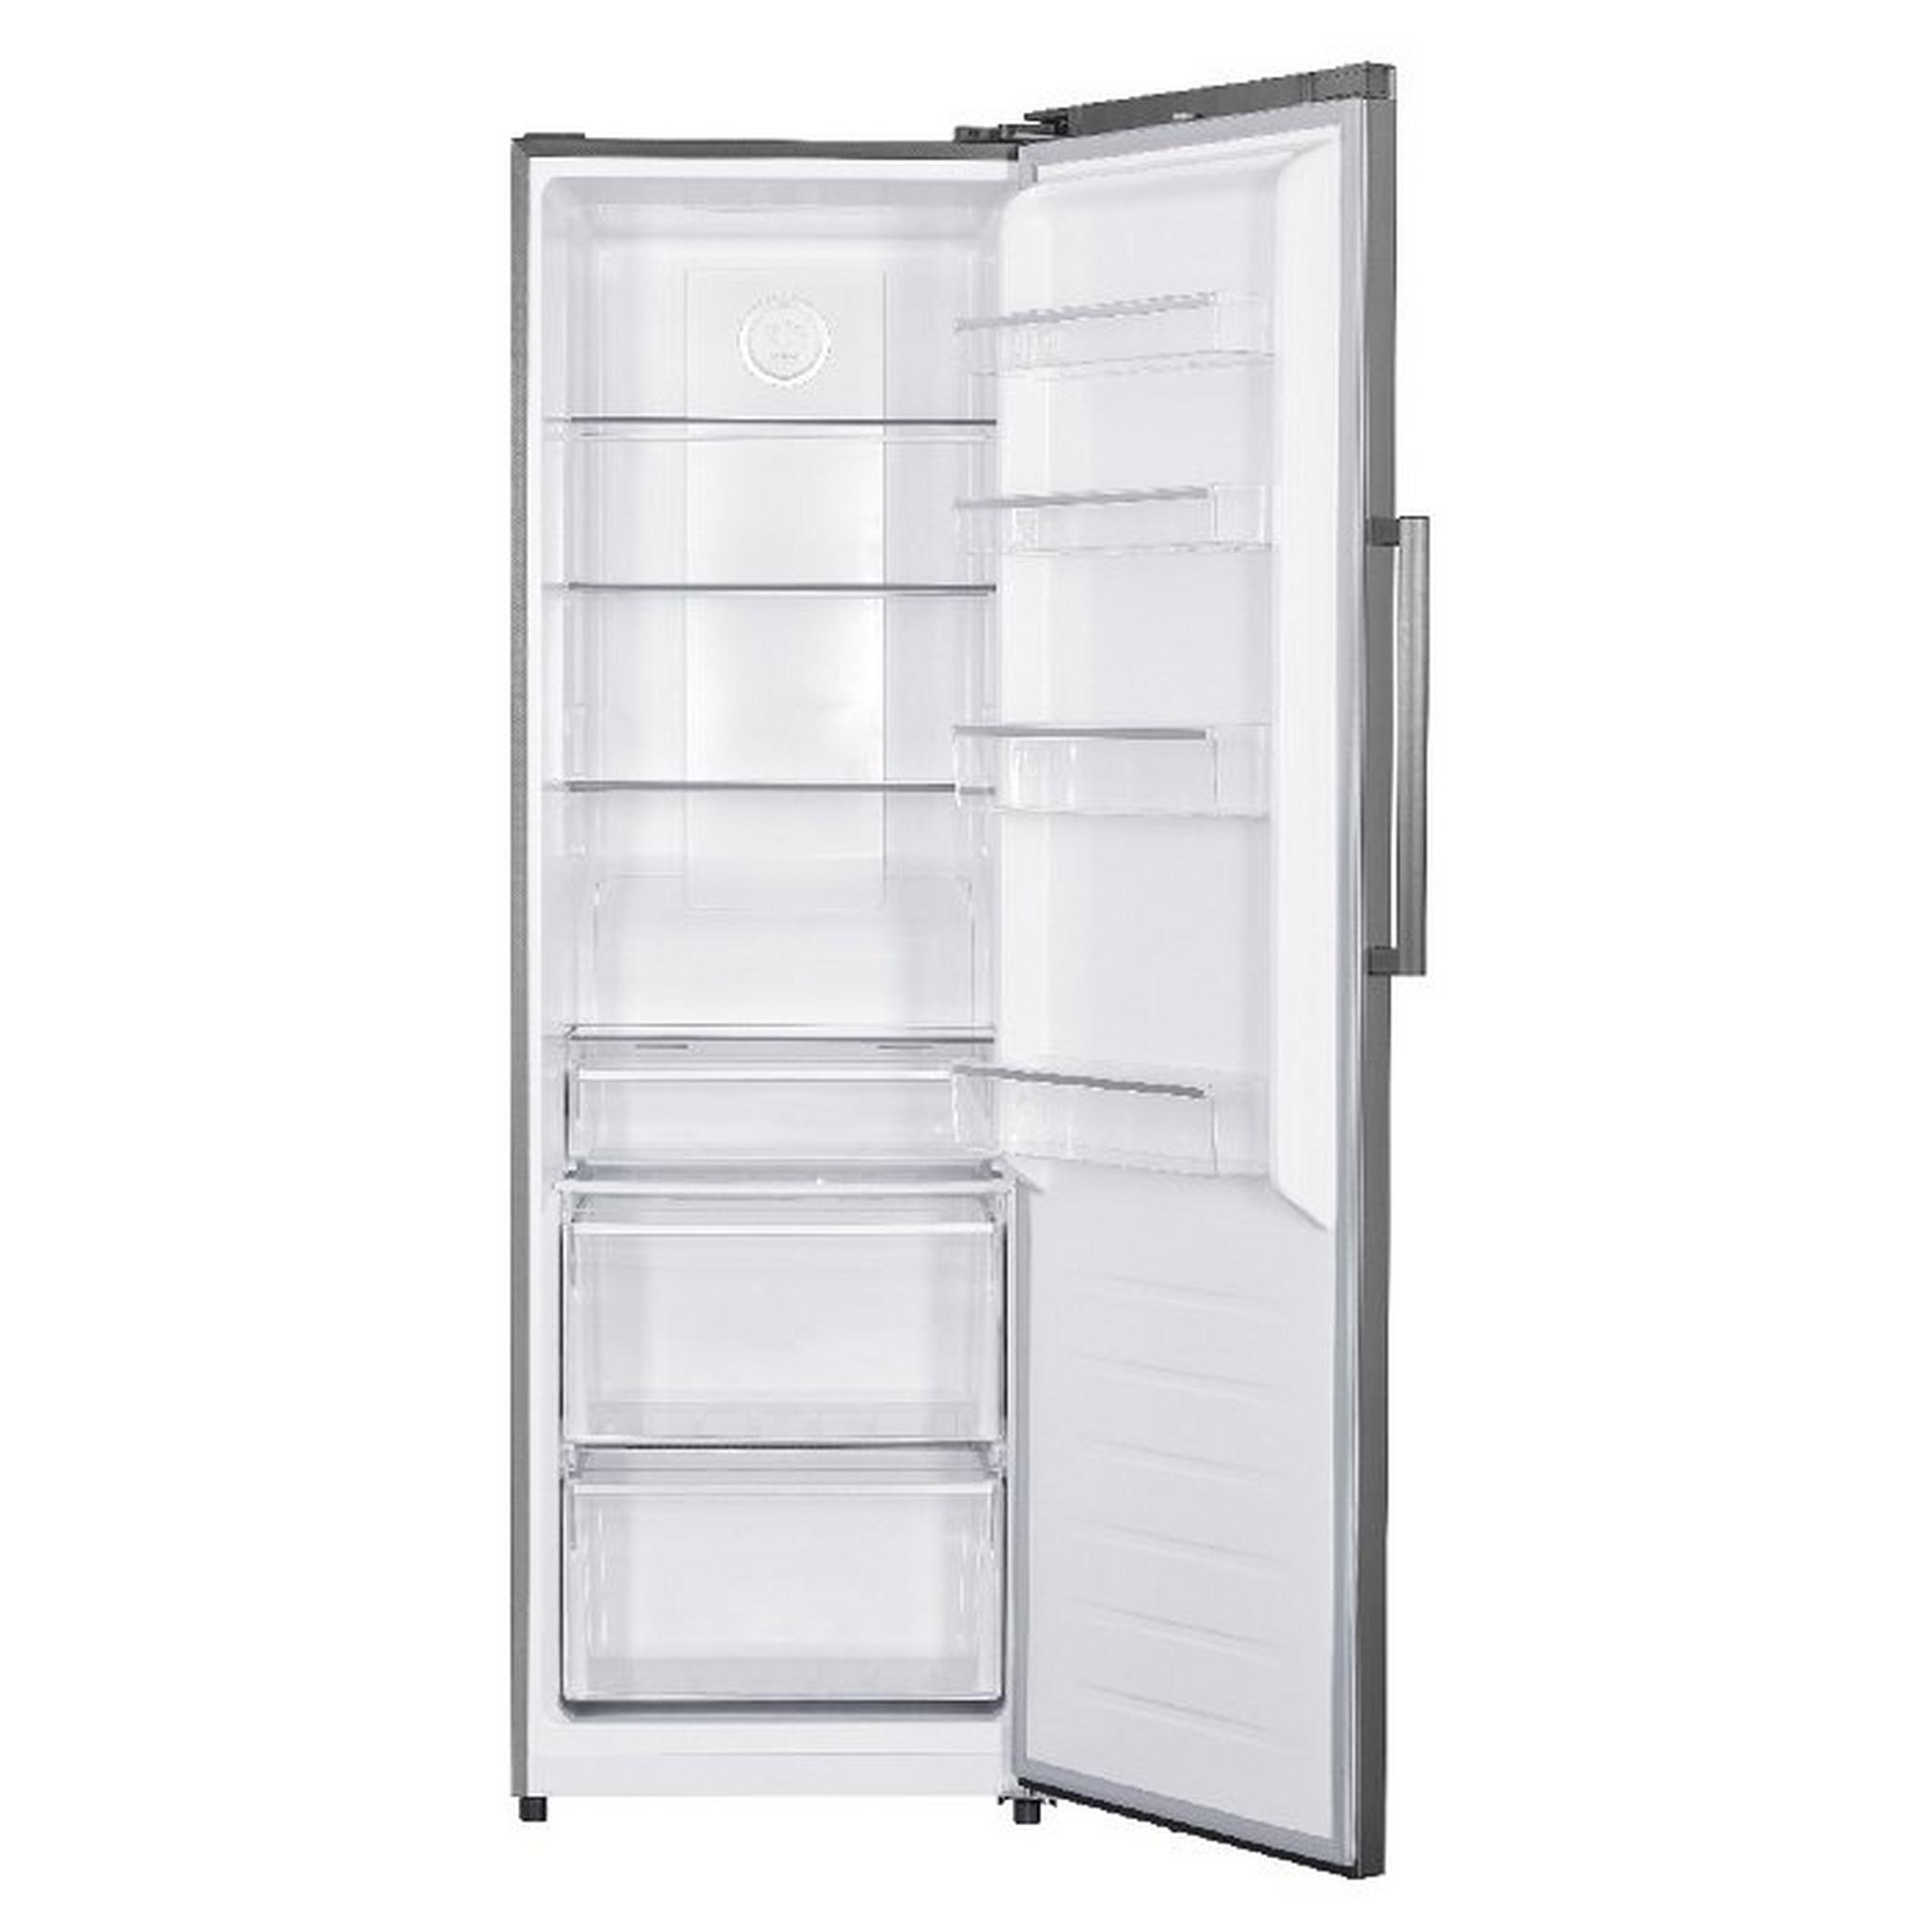 Wansa Upright Freezer 11 Cft + Single Door Refrigerator 13.7 Cft